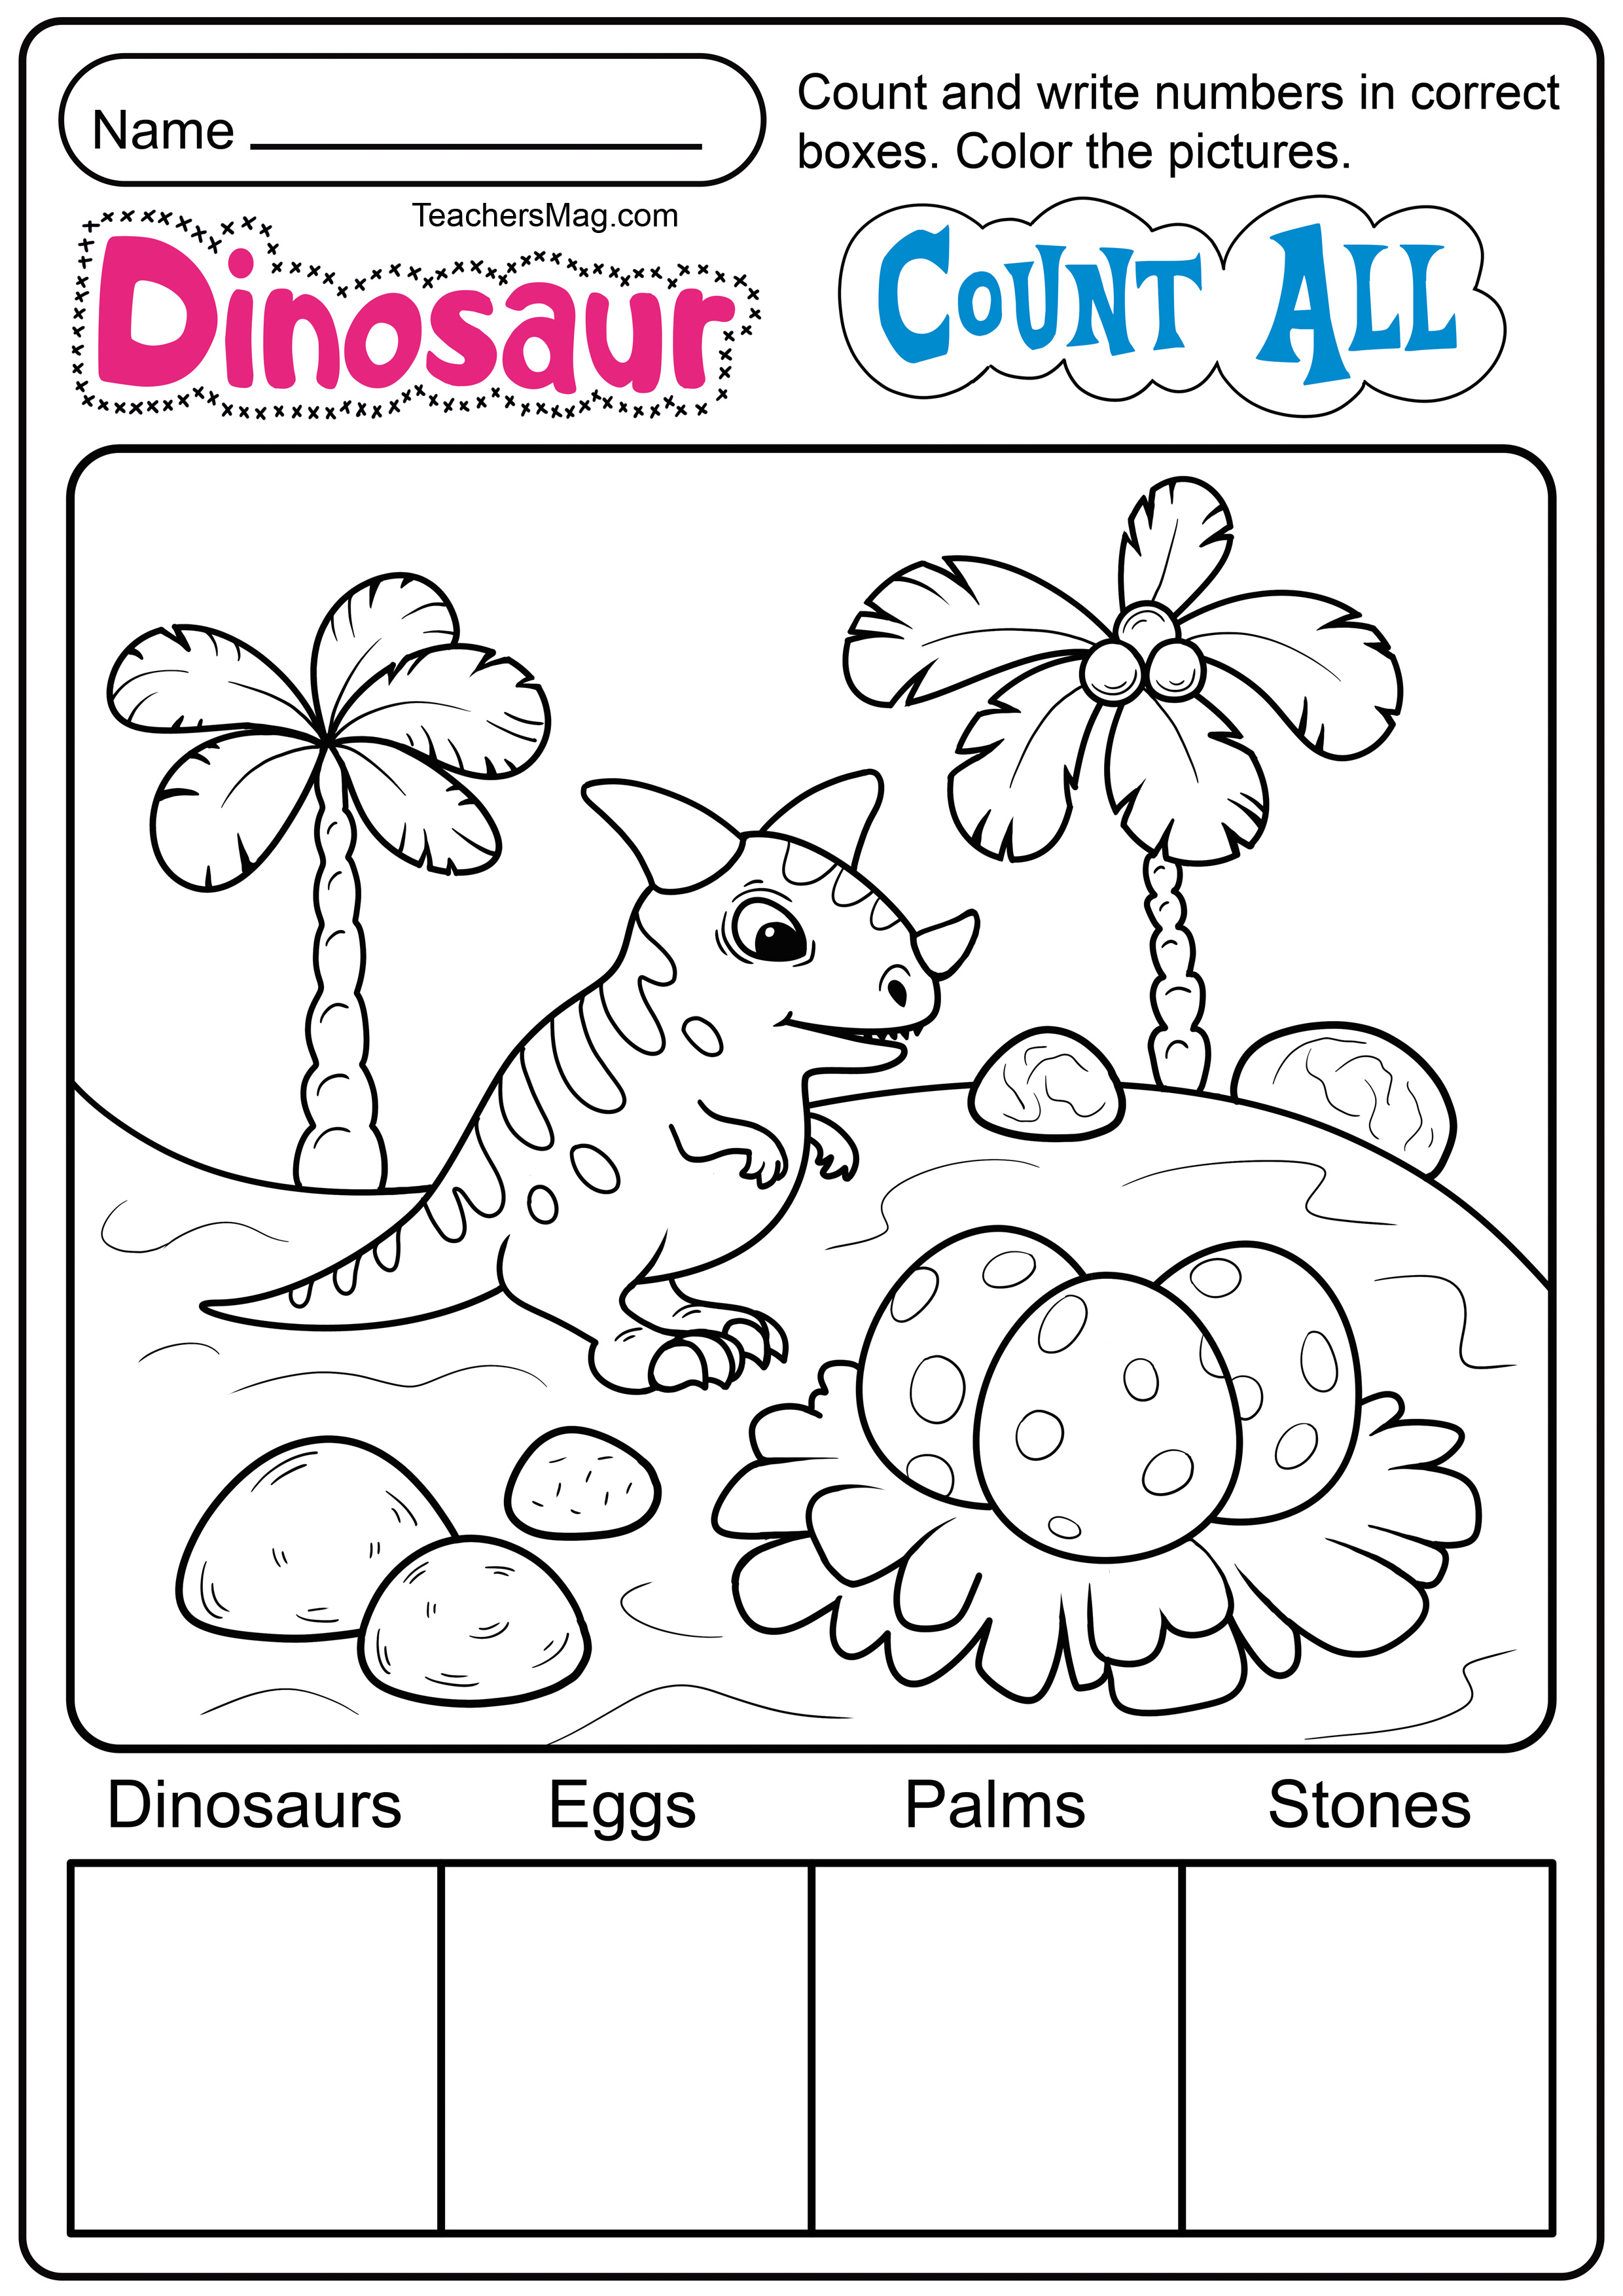 Free Printable Dinosaur Worksheets | TeachersMag.com